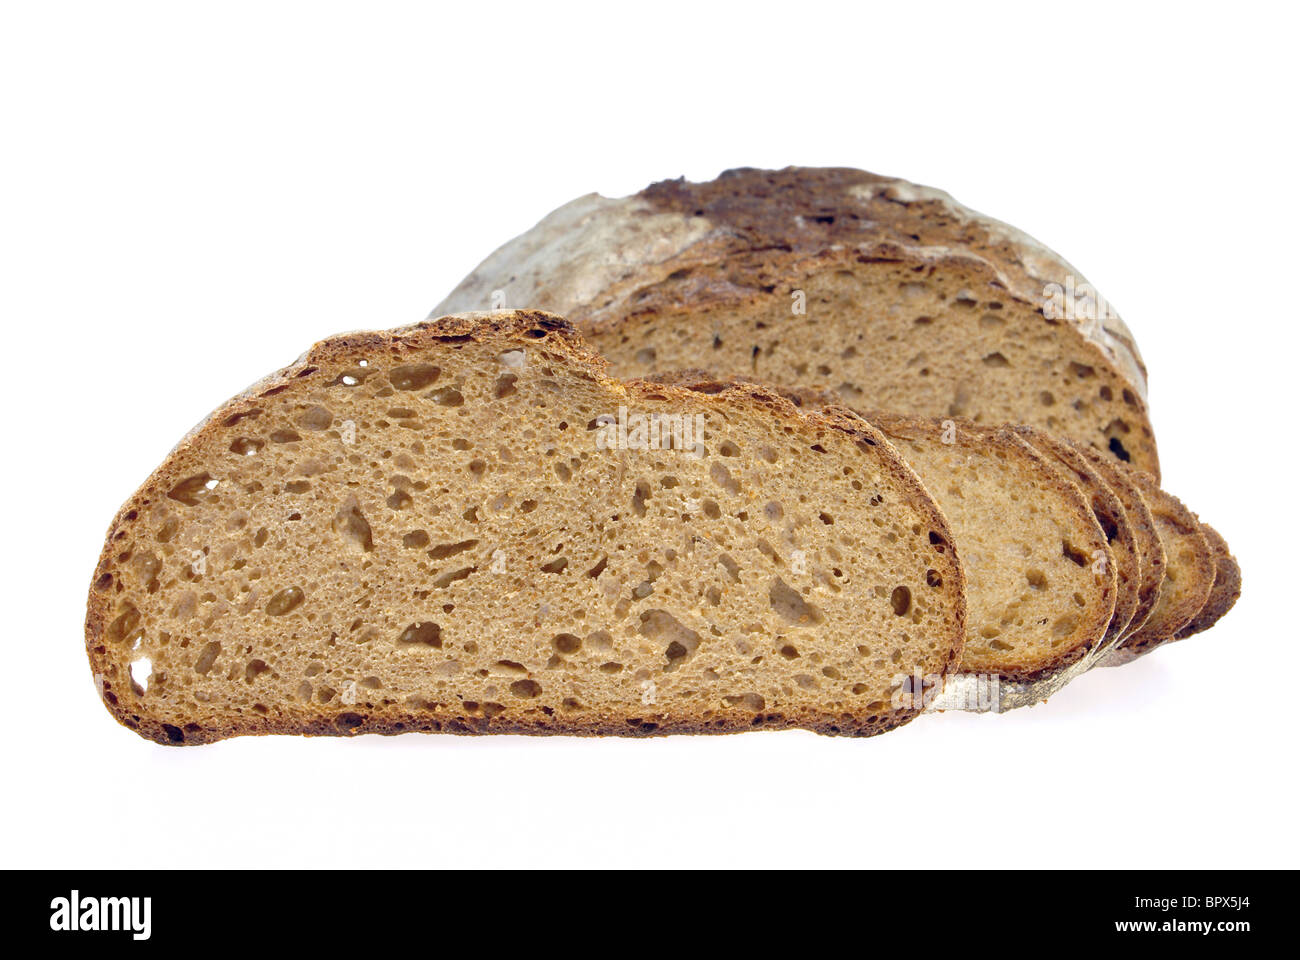 Brot - Brot 13 Stockfoto